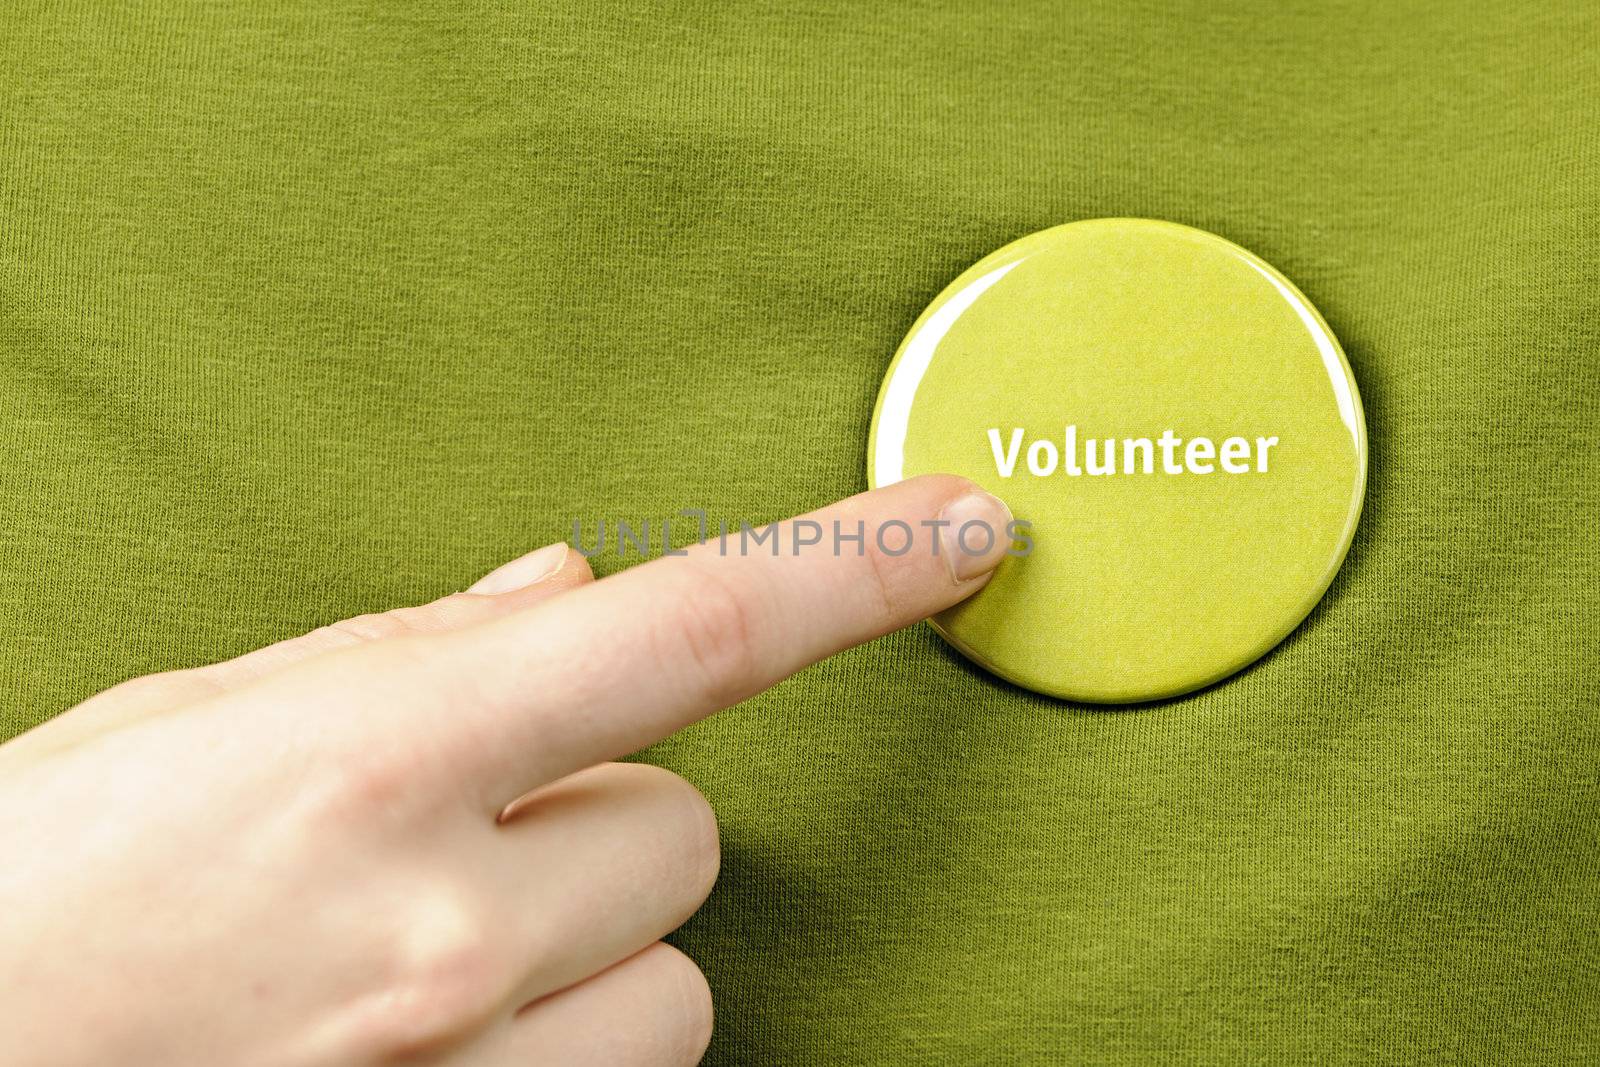 Volunteer button by elenathewise